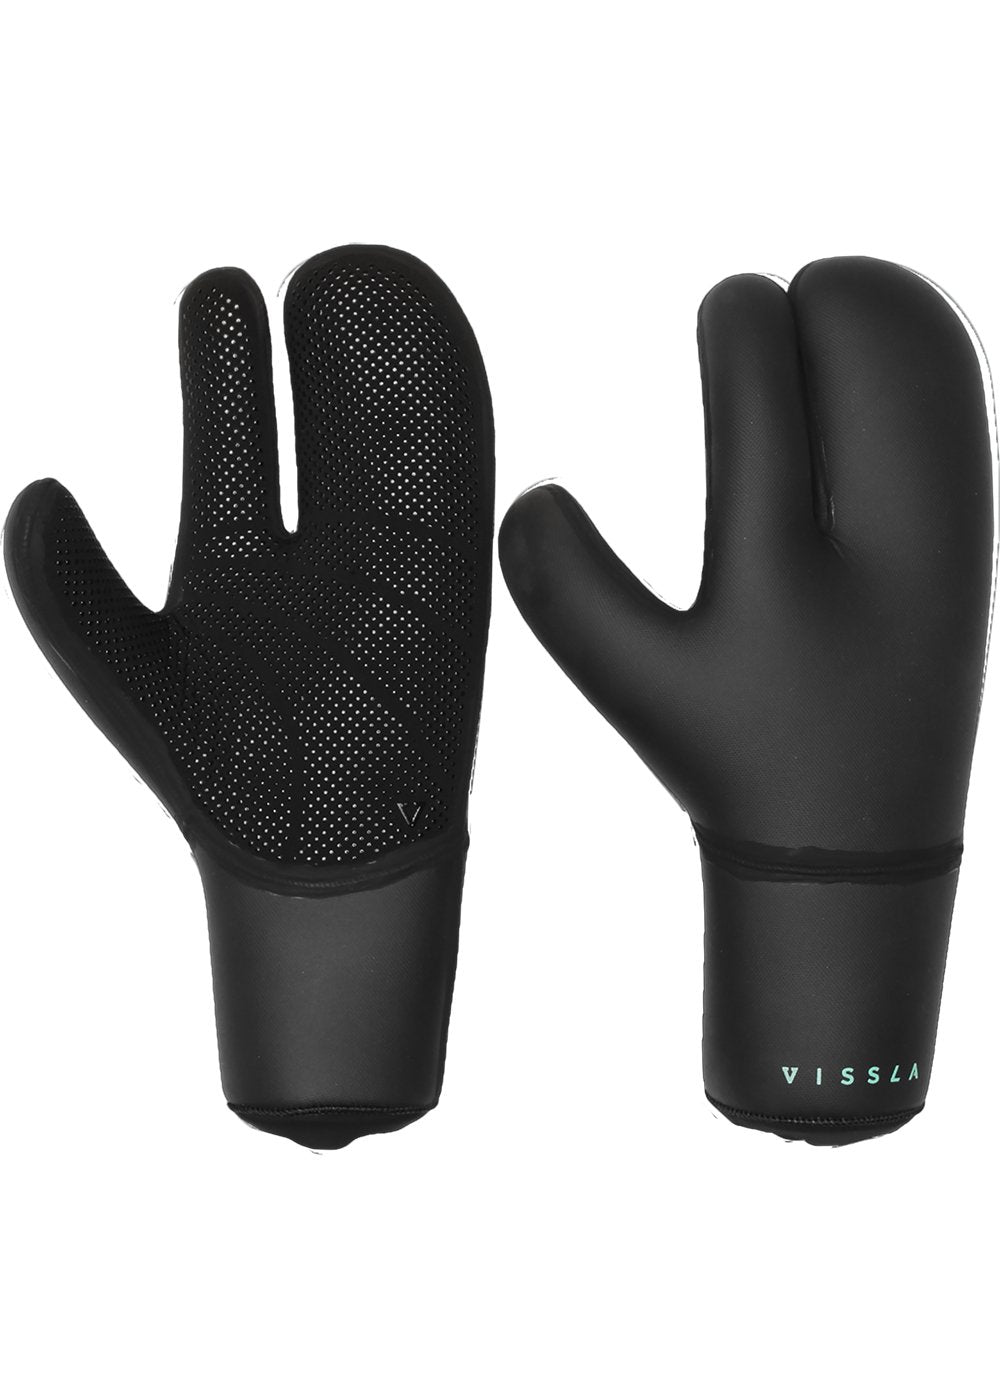 Vissla Men's Black 7 Seas 5MM Claw Wetsuit Glove. Top and Bottom View.